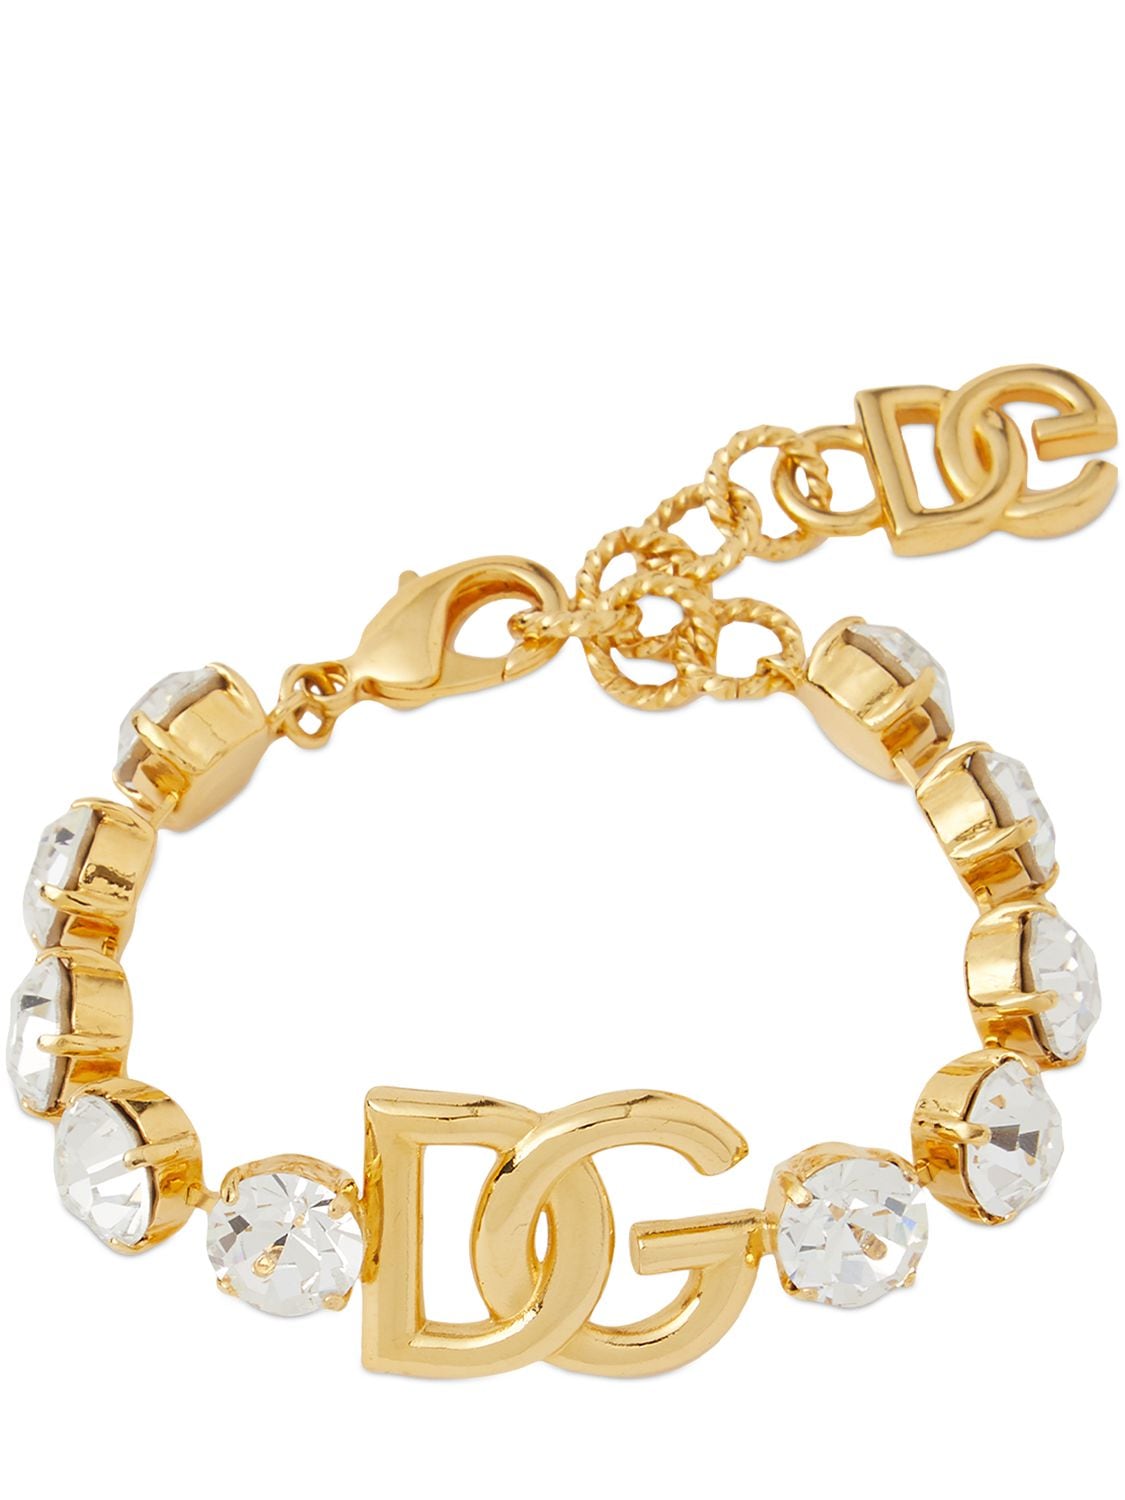 Image of Dg Crystal Chain Bracelet